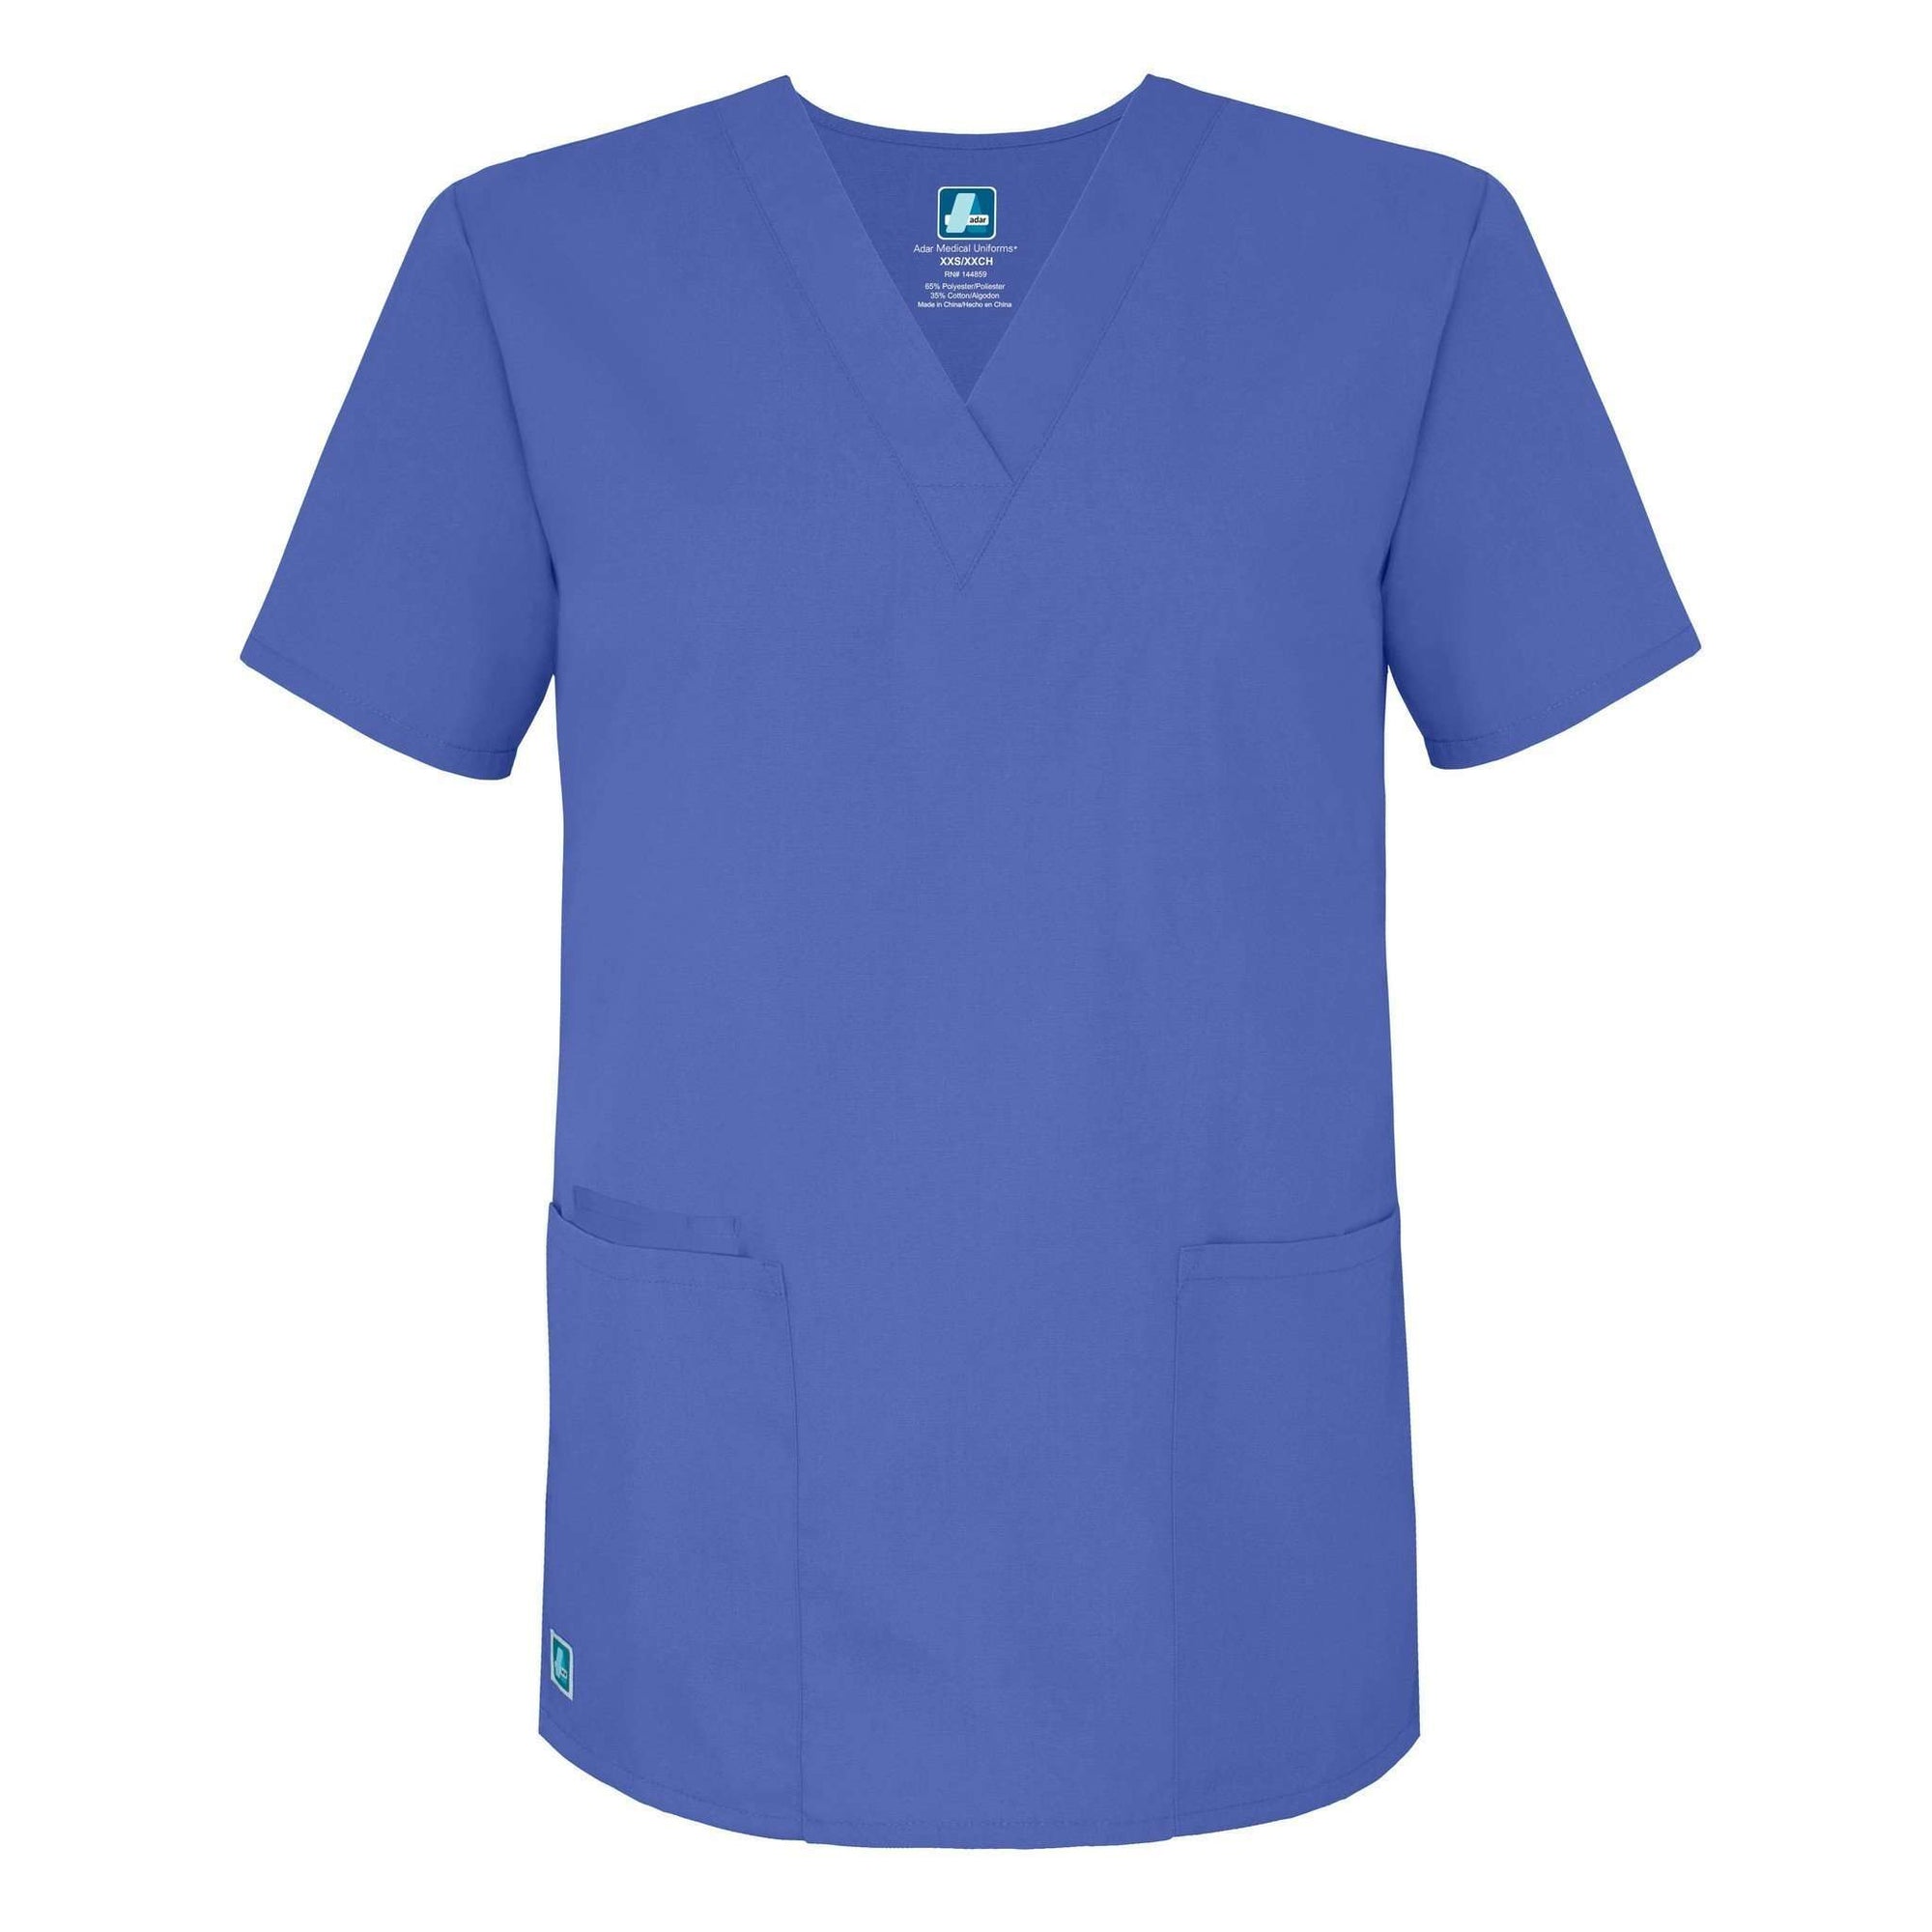  Adar - uniforms Medical Uniform Tops uniforms online Adar Universal Unisex V-Neck 2 Pocket Scrub Top Ceil Blue S - SchoolUniforms.com